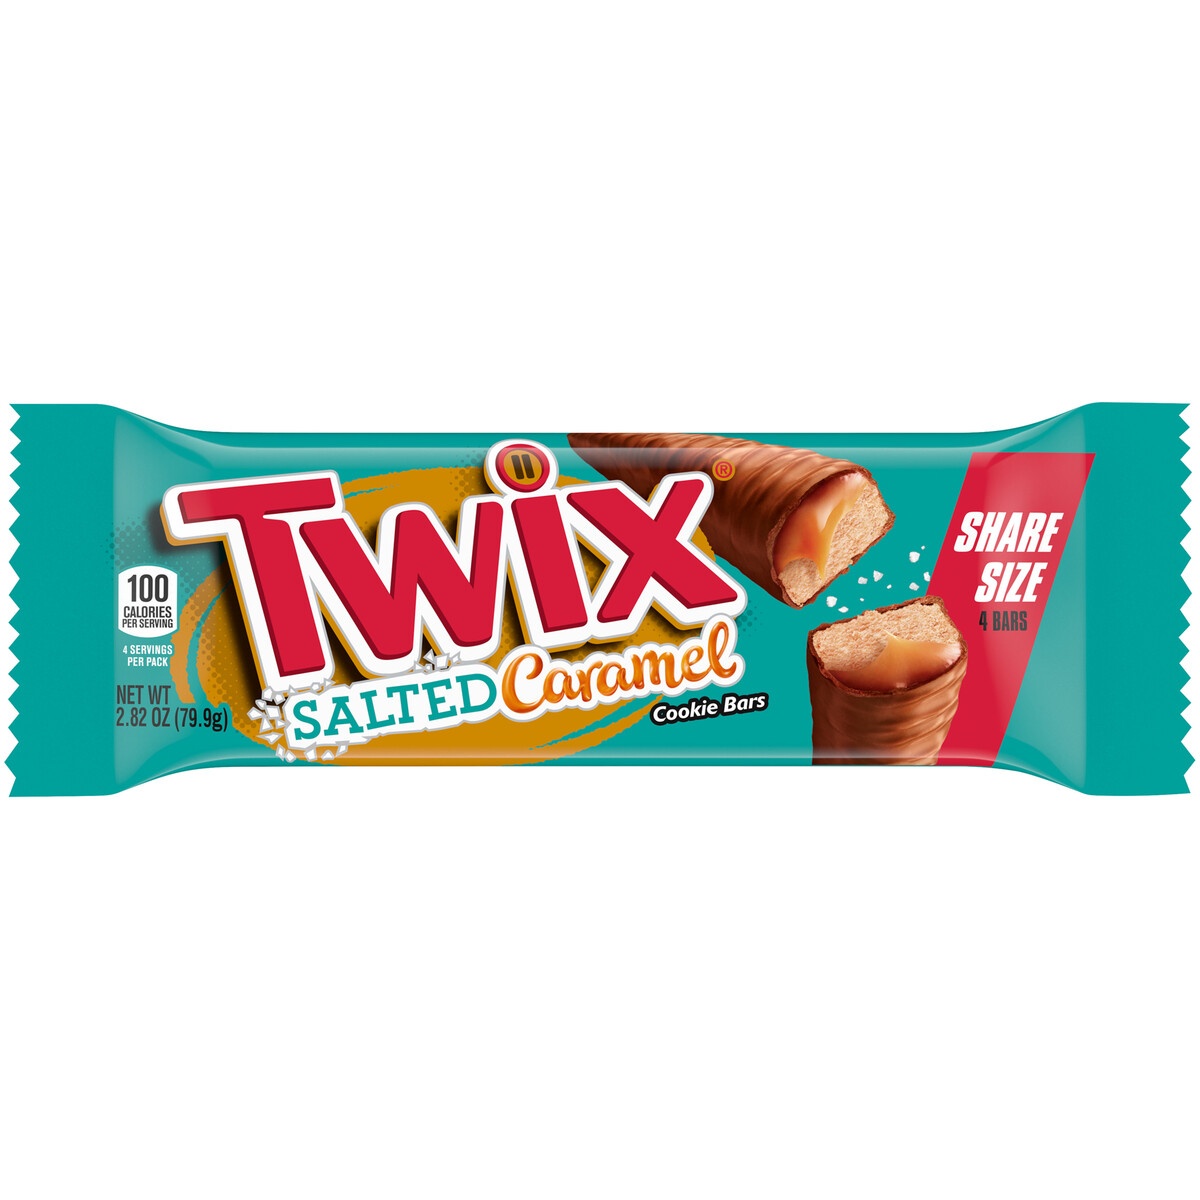 slide 1 of 1, TWIX Cookie Bars, Salted Caramel, Share Size, 2.82 oz